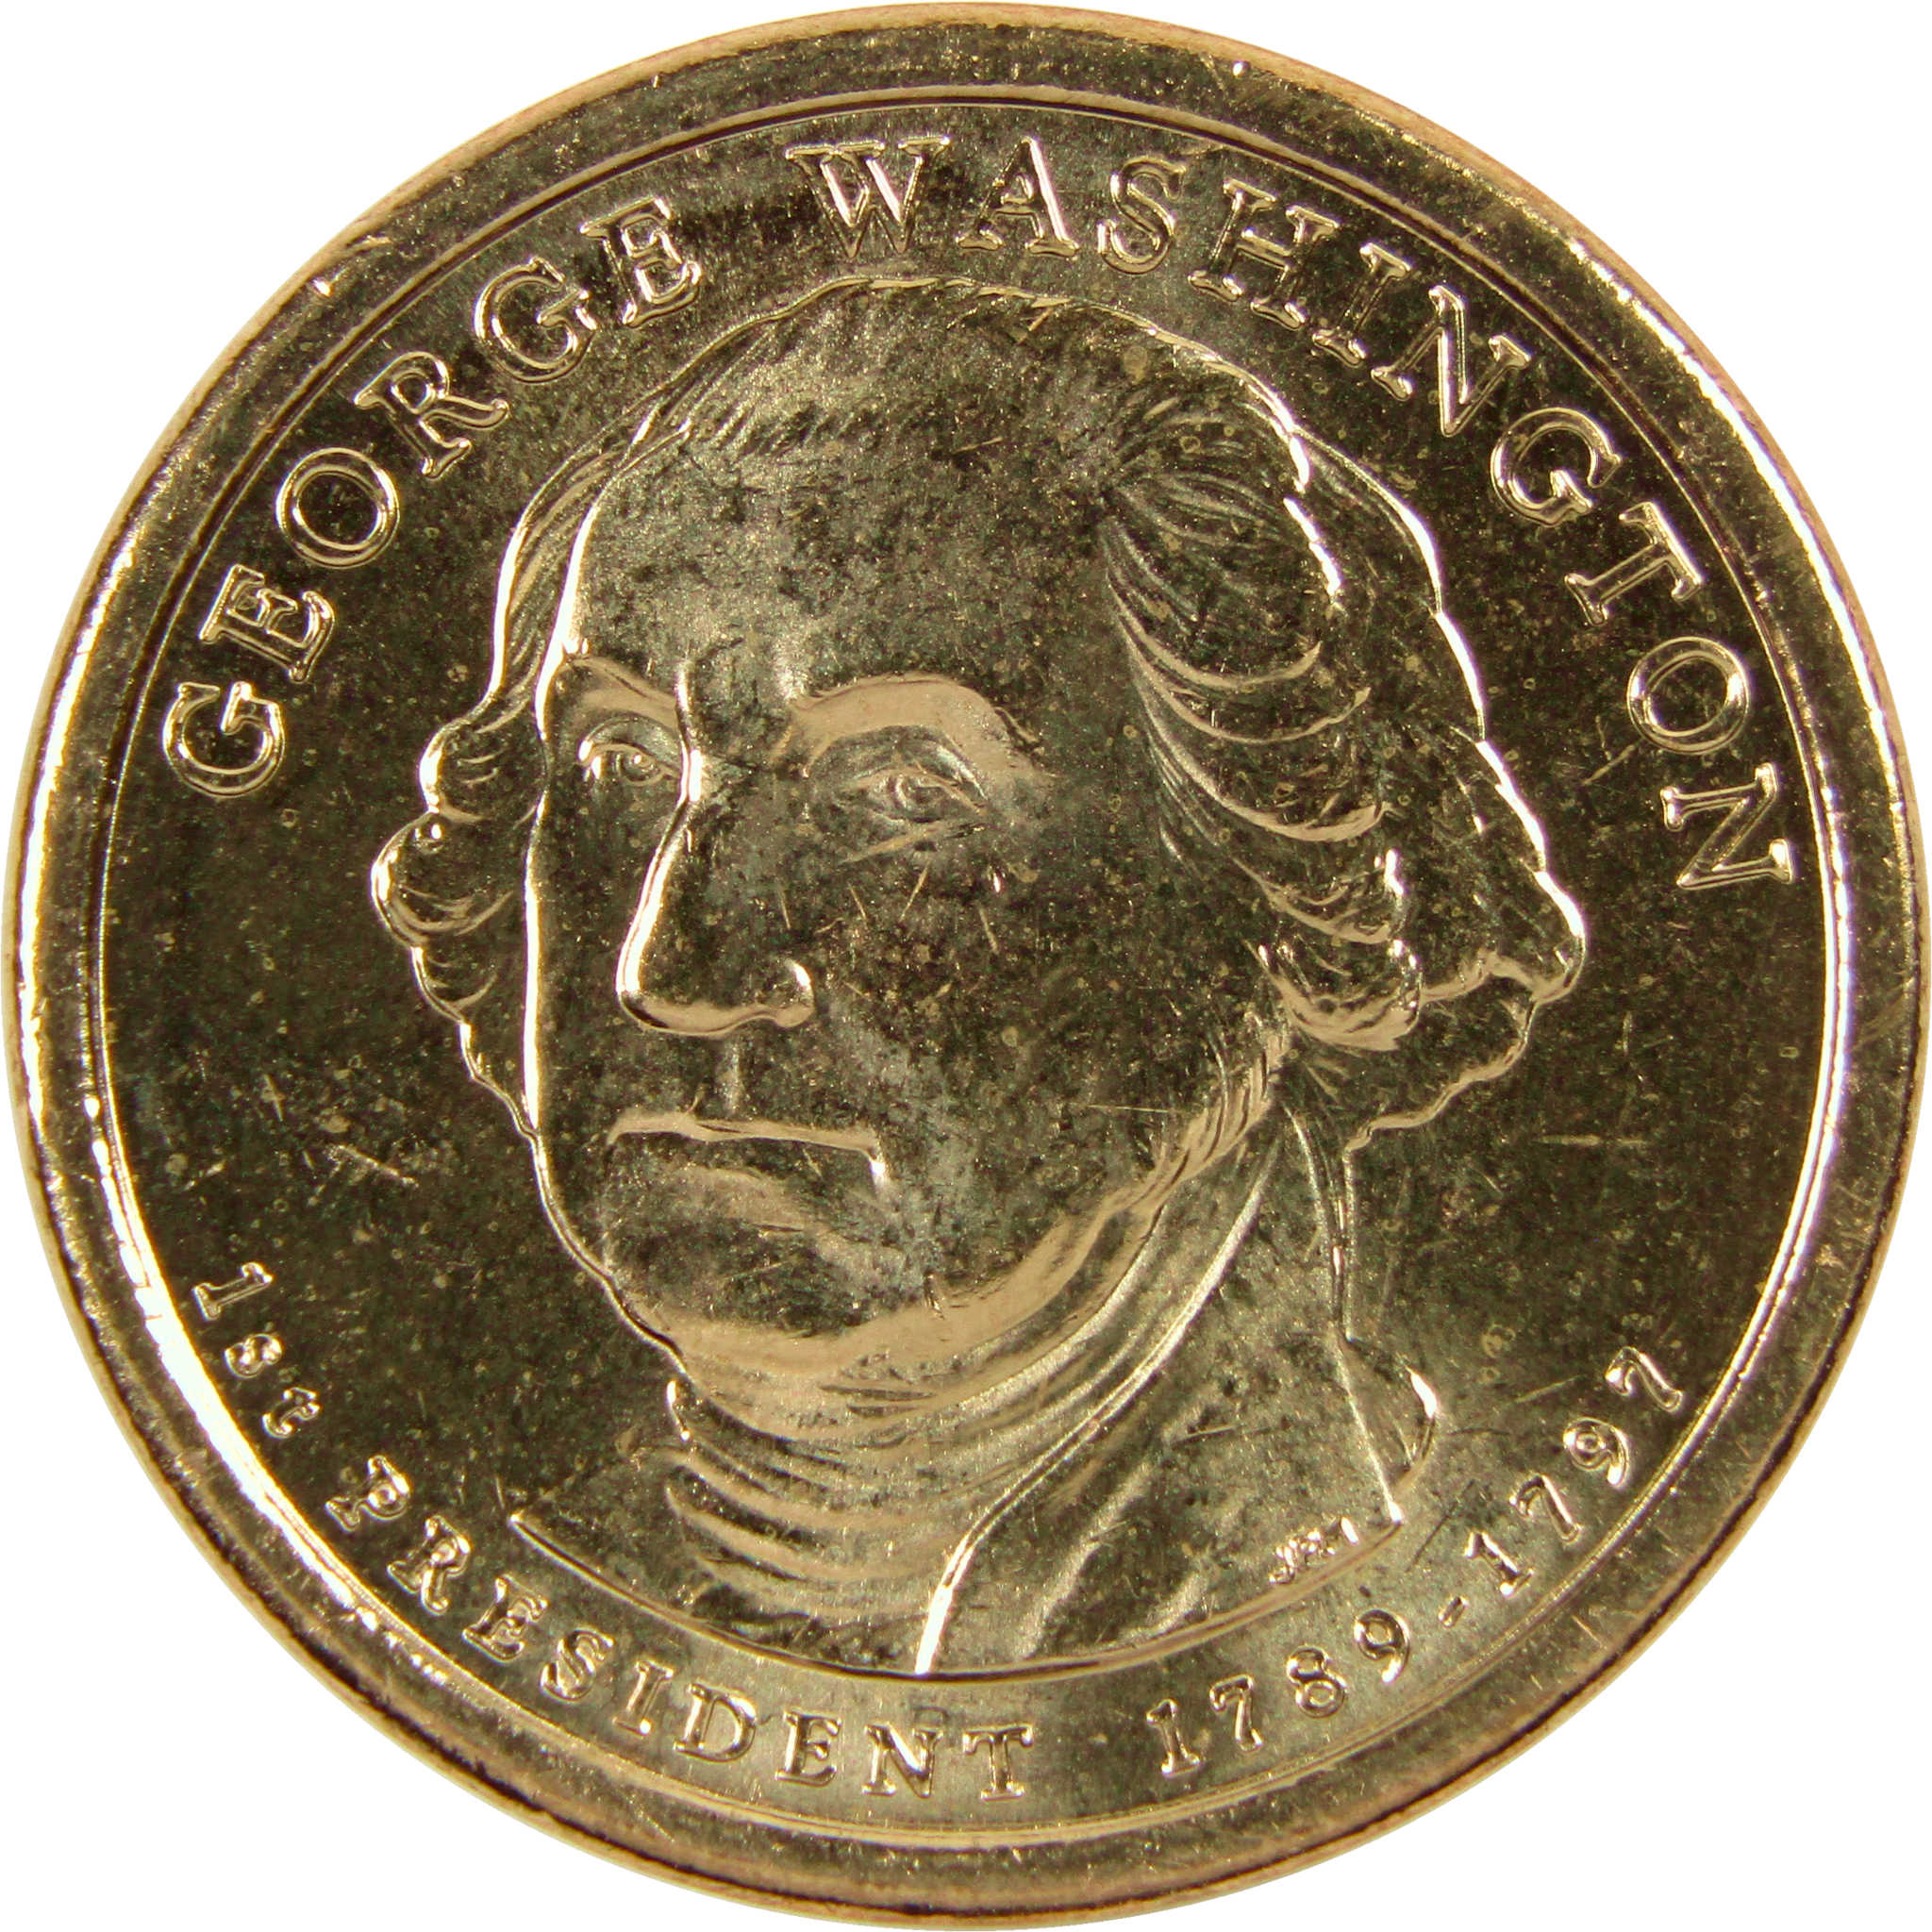 2007 D George Washington Presidential Dollar BU Uncirculated $1 Coin